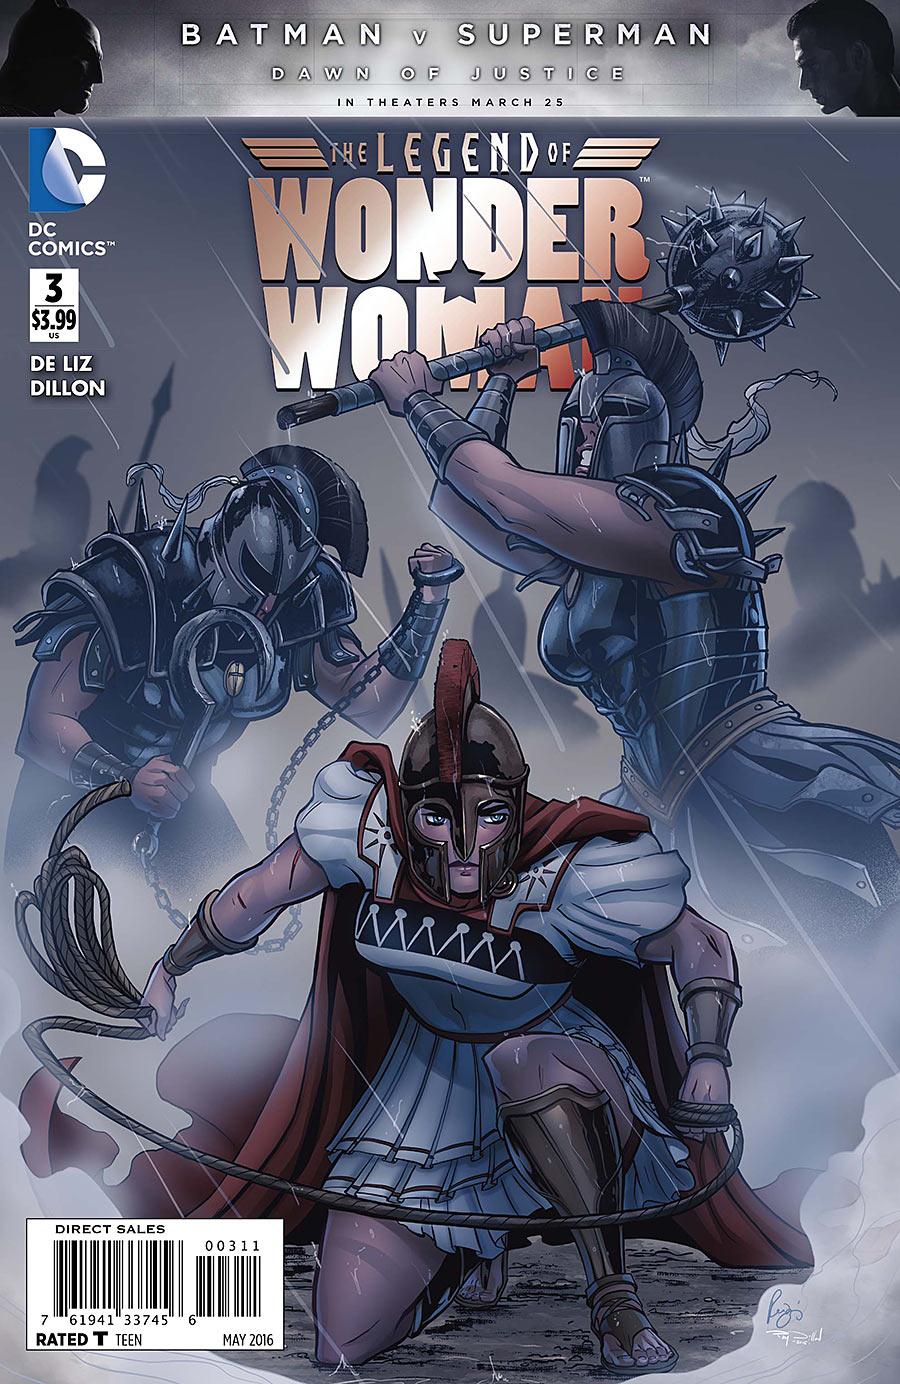 The Legend of Wonder Woman Vol. 2 #3